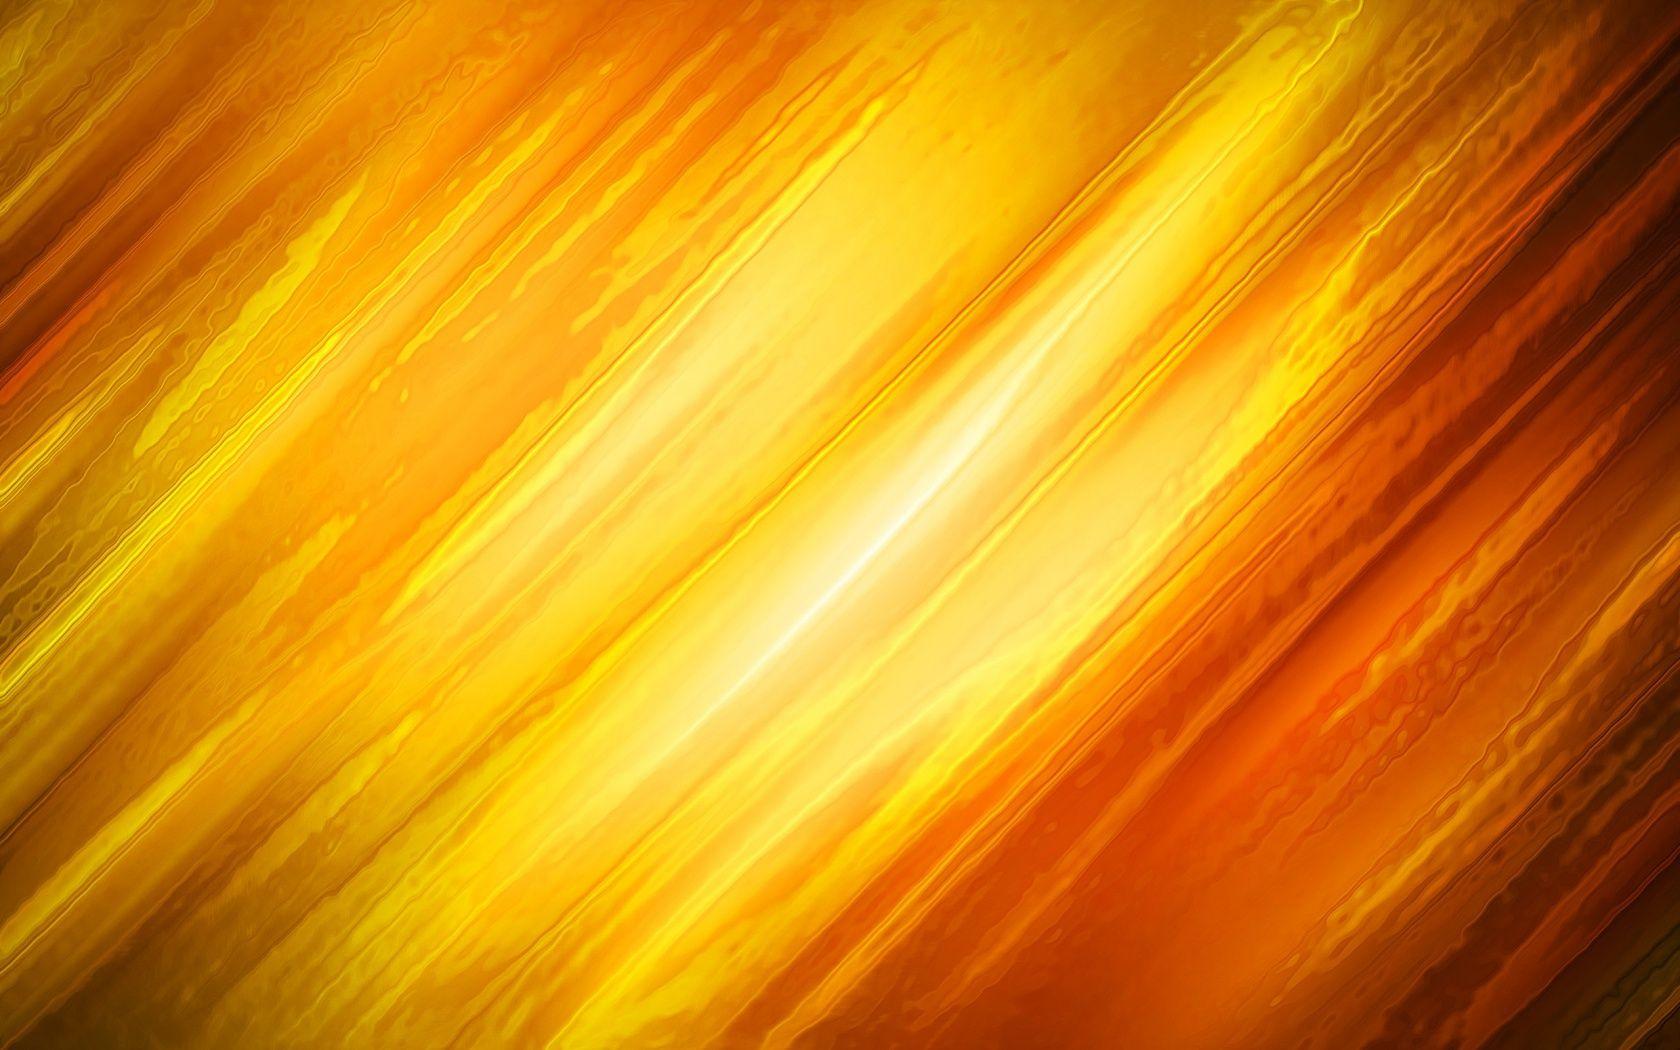 Orange Background.. Abstract Yellow and Orange Background